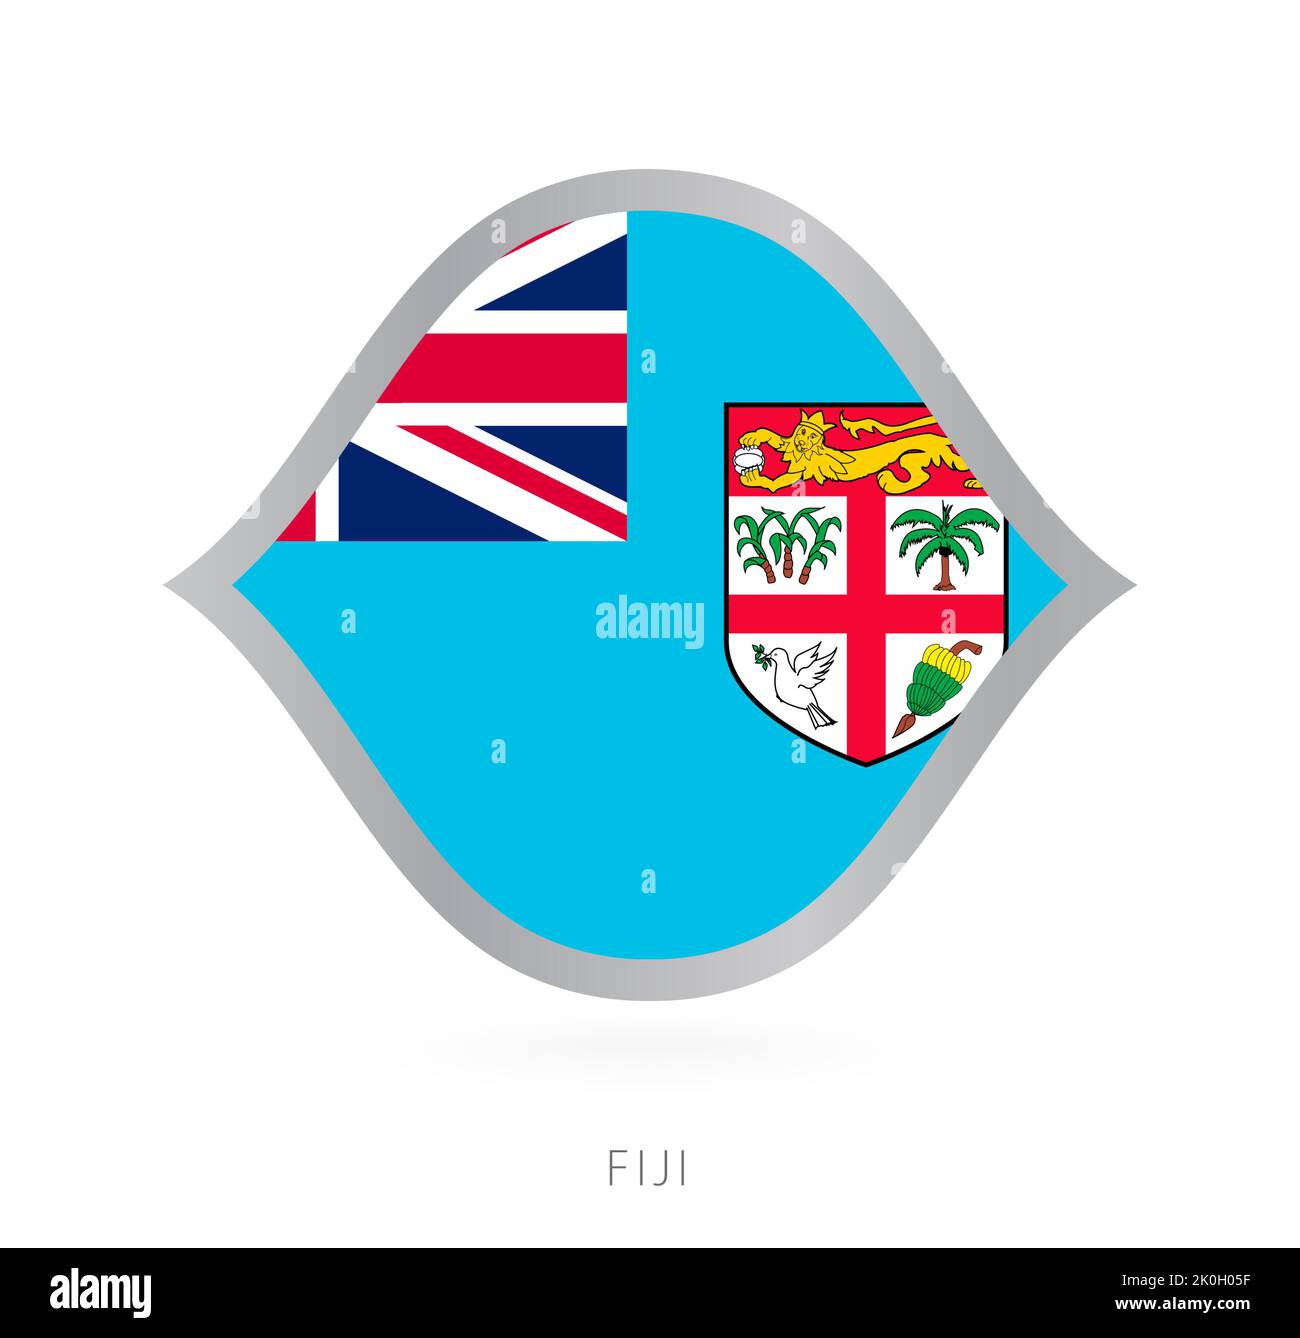 Fiji match Banque d'images vectorielles - Alamy